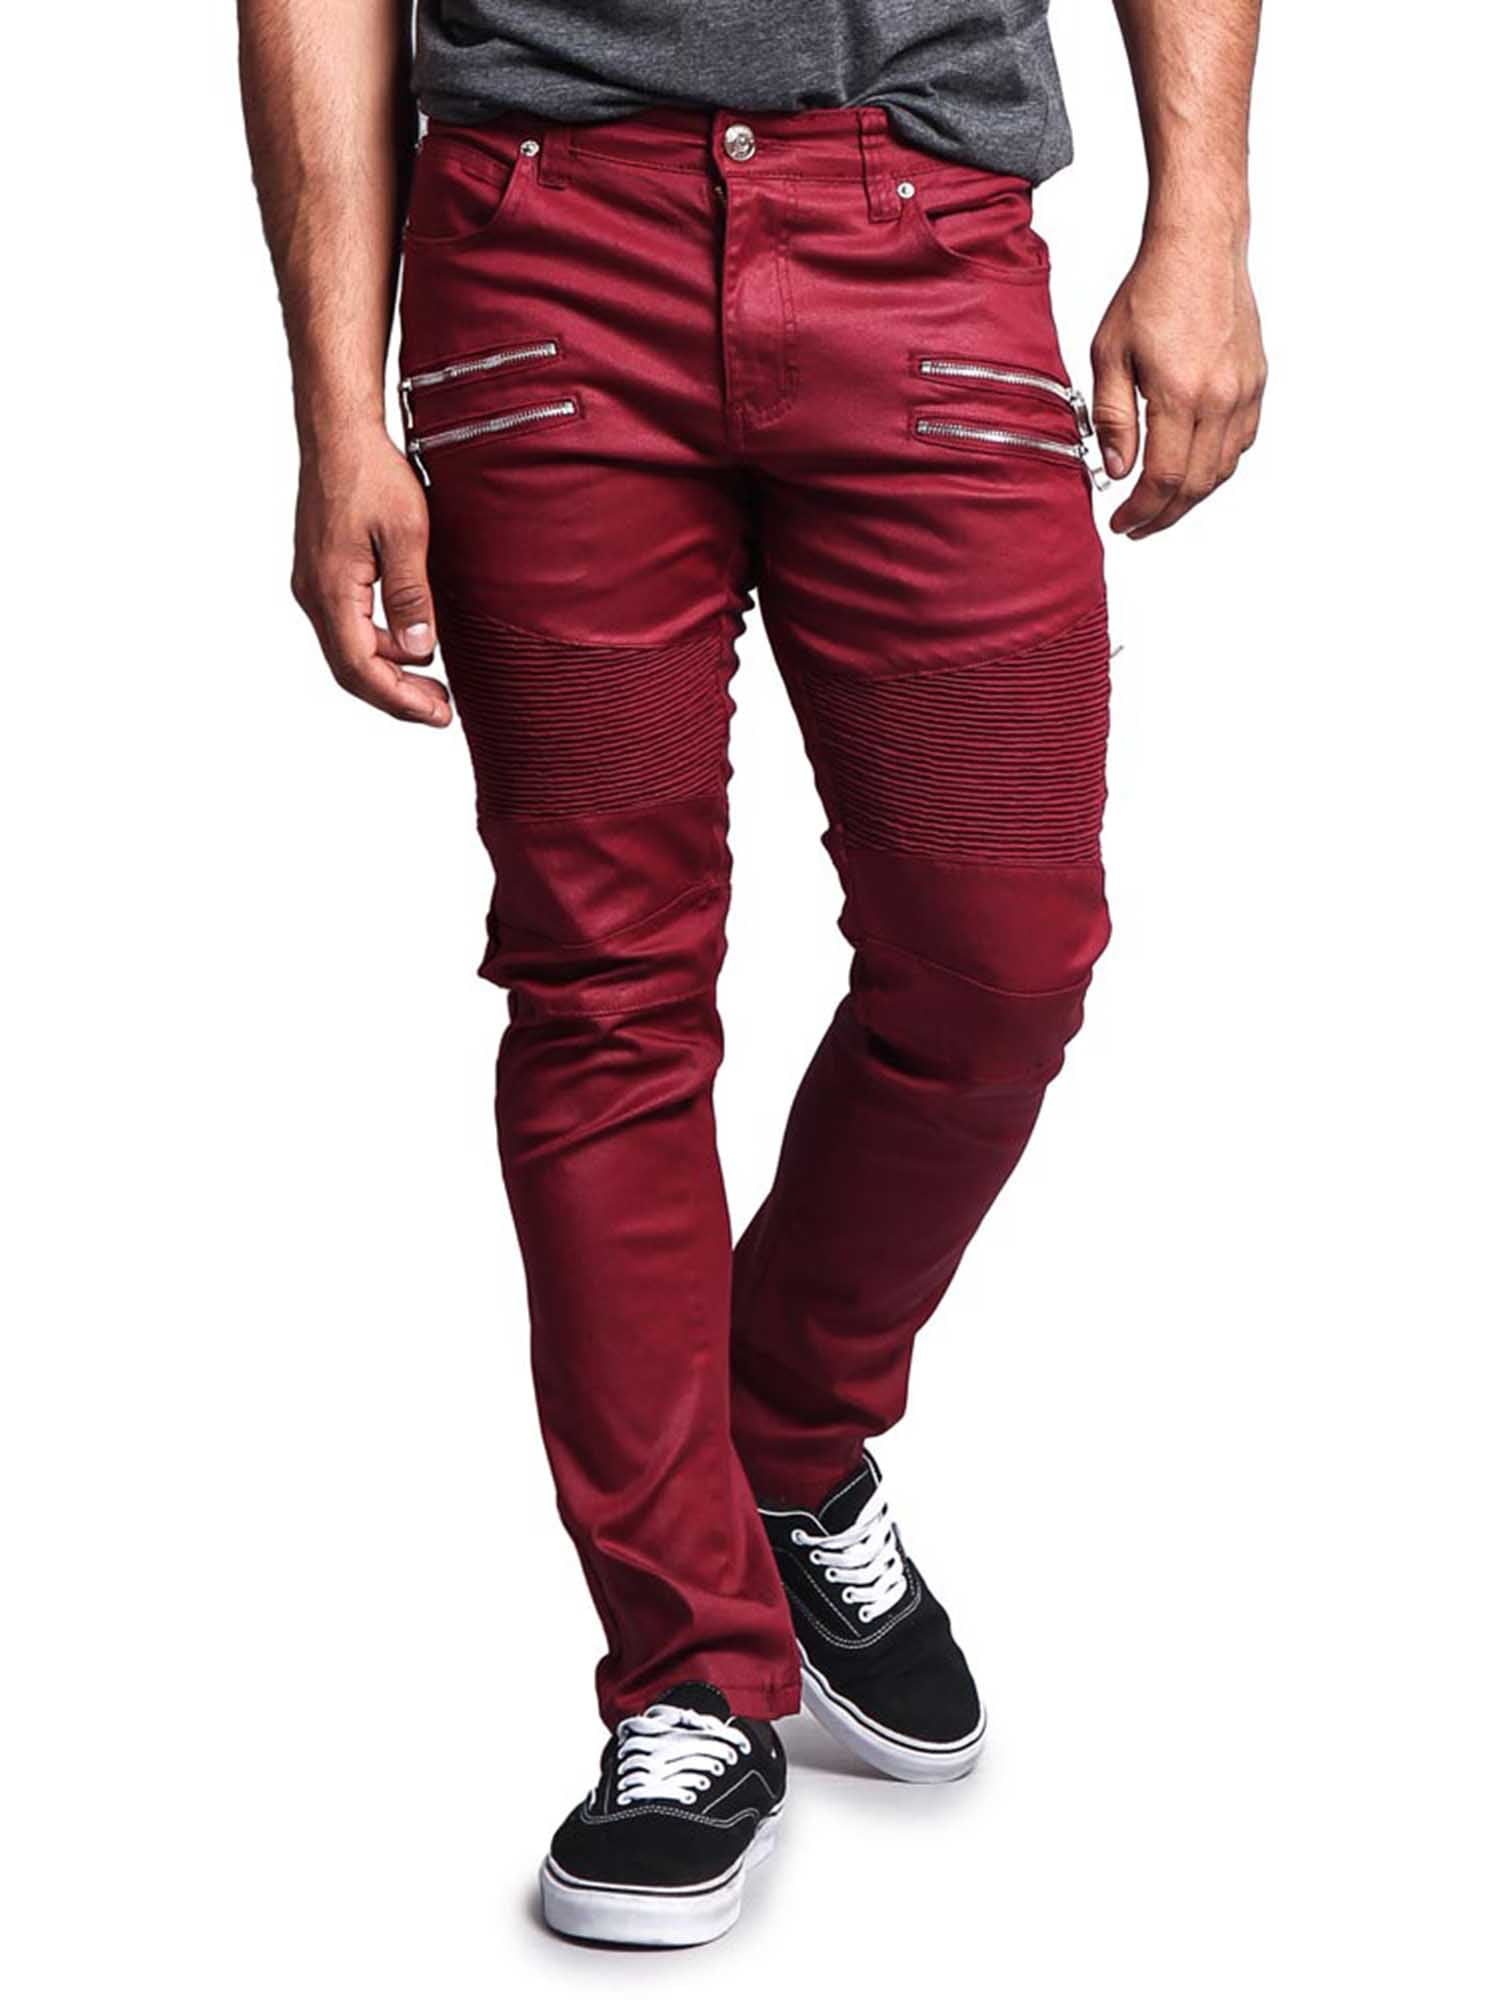 fonds behang Leuk vinden Victorious Men's Coated Slim Fit Moto Pants Biker Jeans - Burgundy - 32/30  - Walmart.com